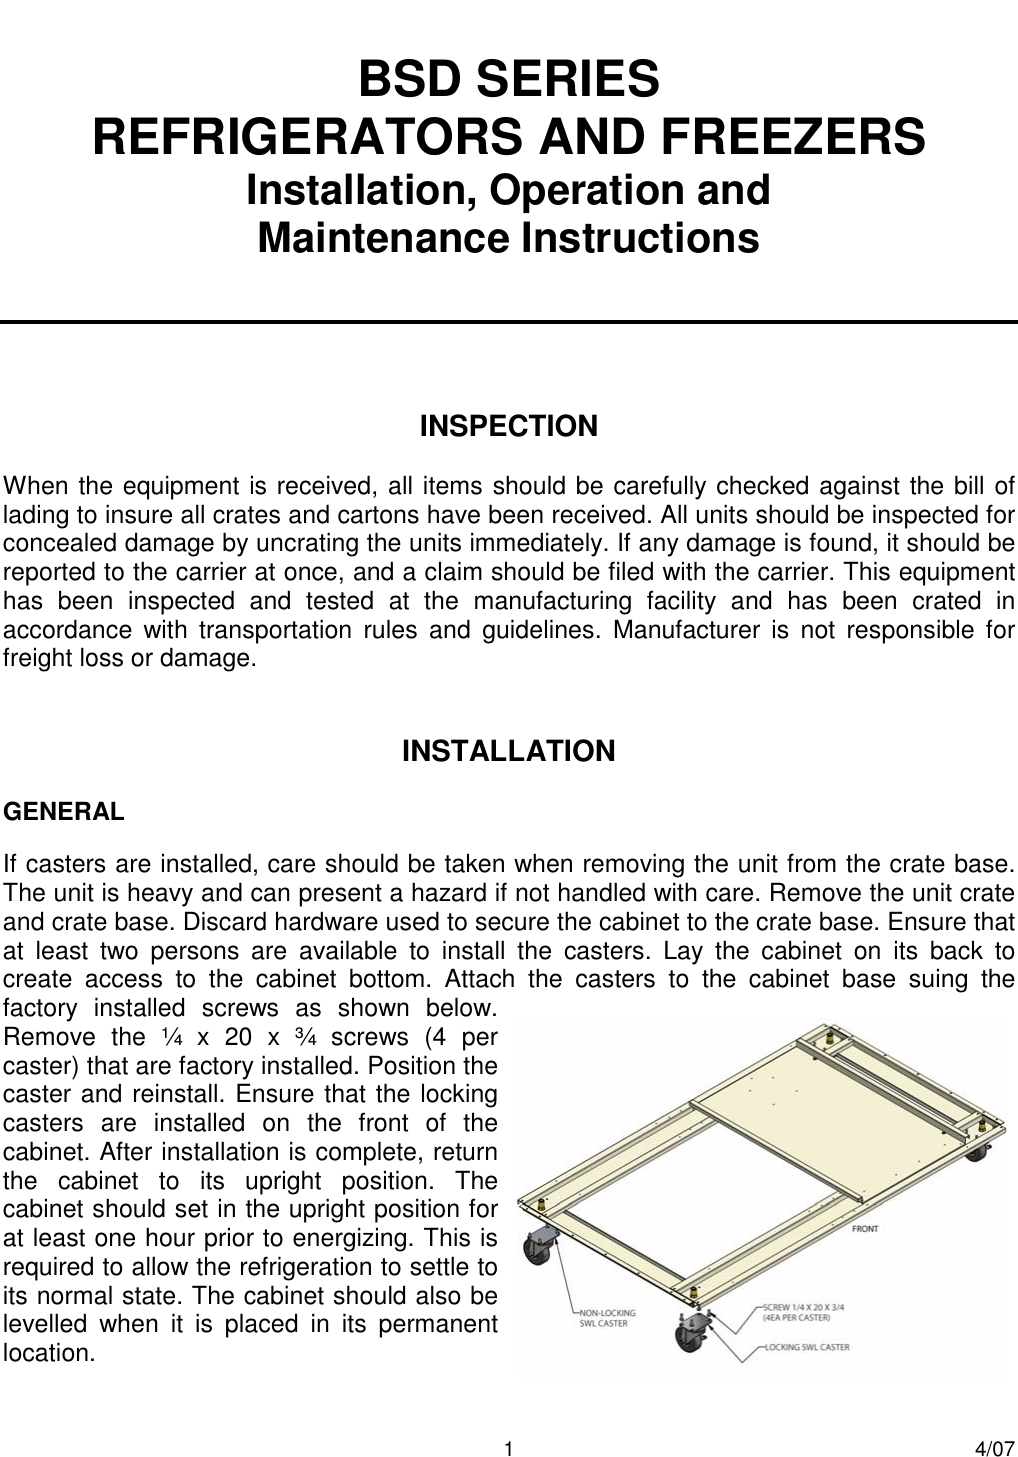 Page 1 of 9 - Master-Bilt Master-Bilt-Bsd-Series-Users-Manual NEW Basemount Install Manual